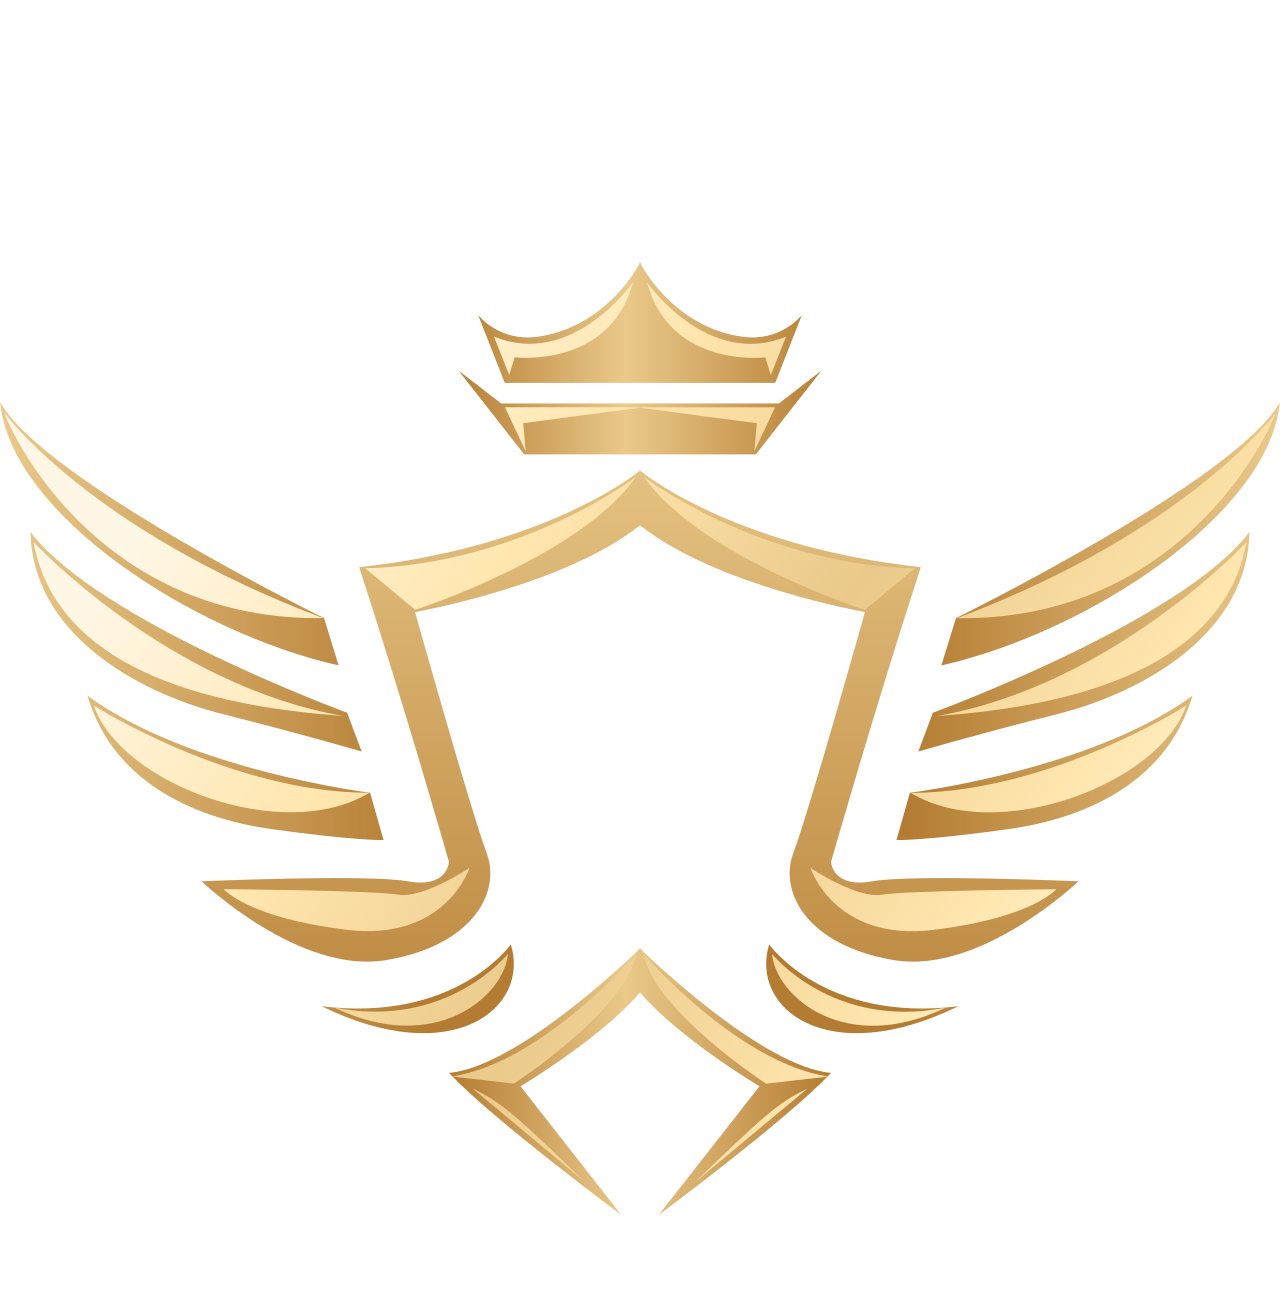 Hynes Health's logo